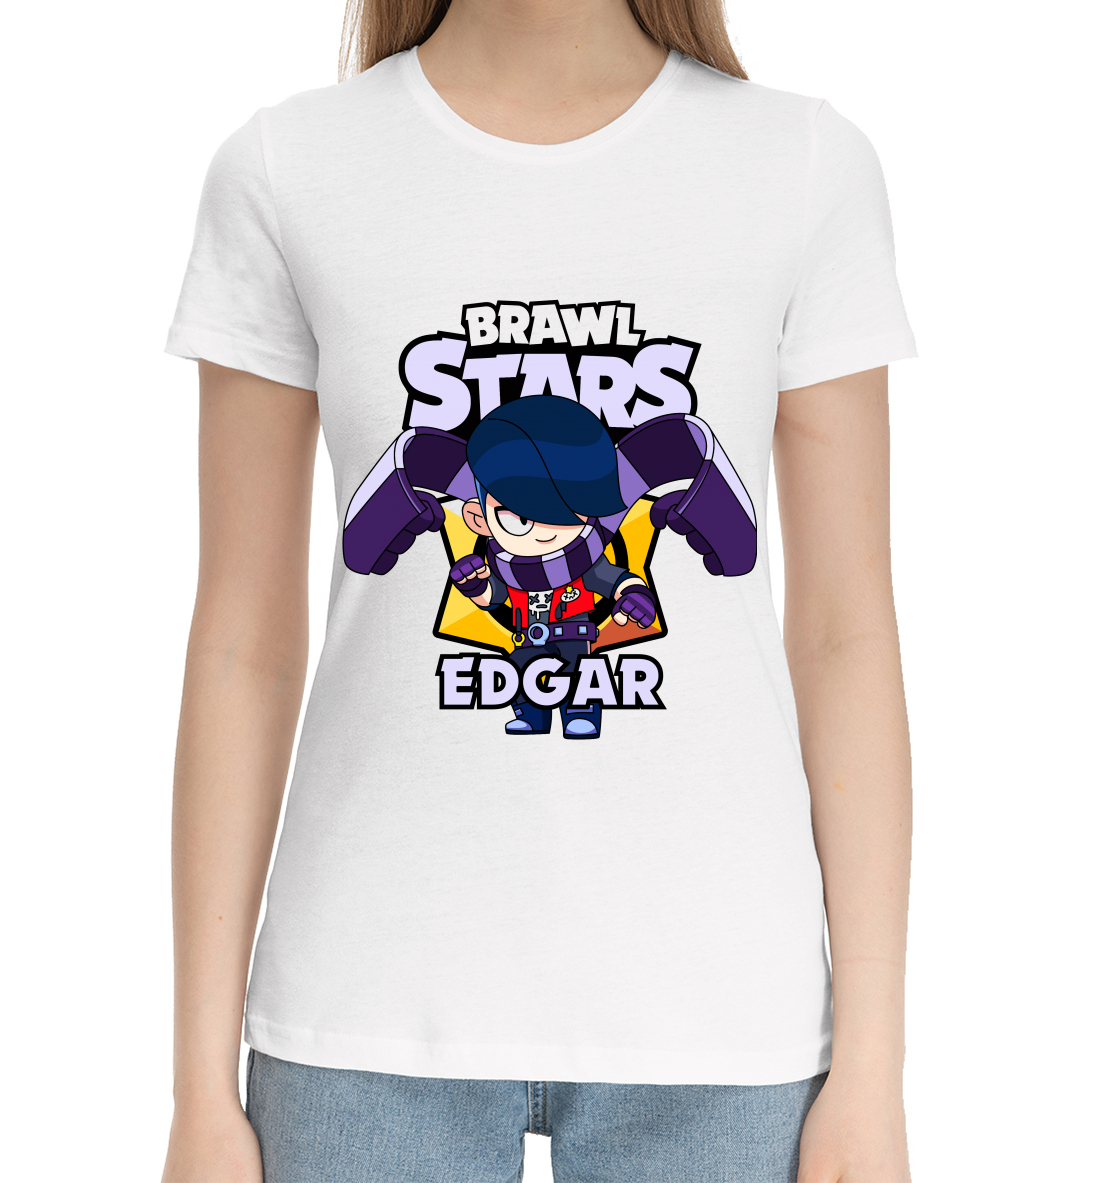 Женская Хлопковая футболка с принтом Brawl Stars, Edgar, артикул CLH-264605-hfu-1mp